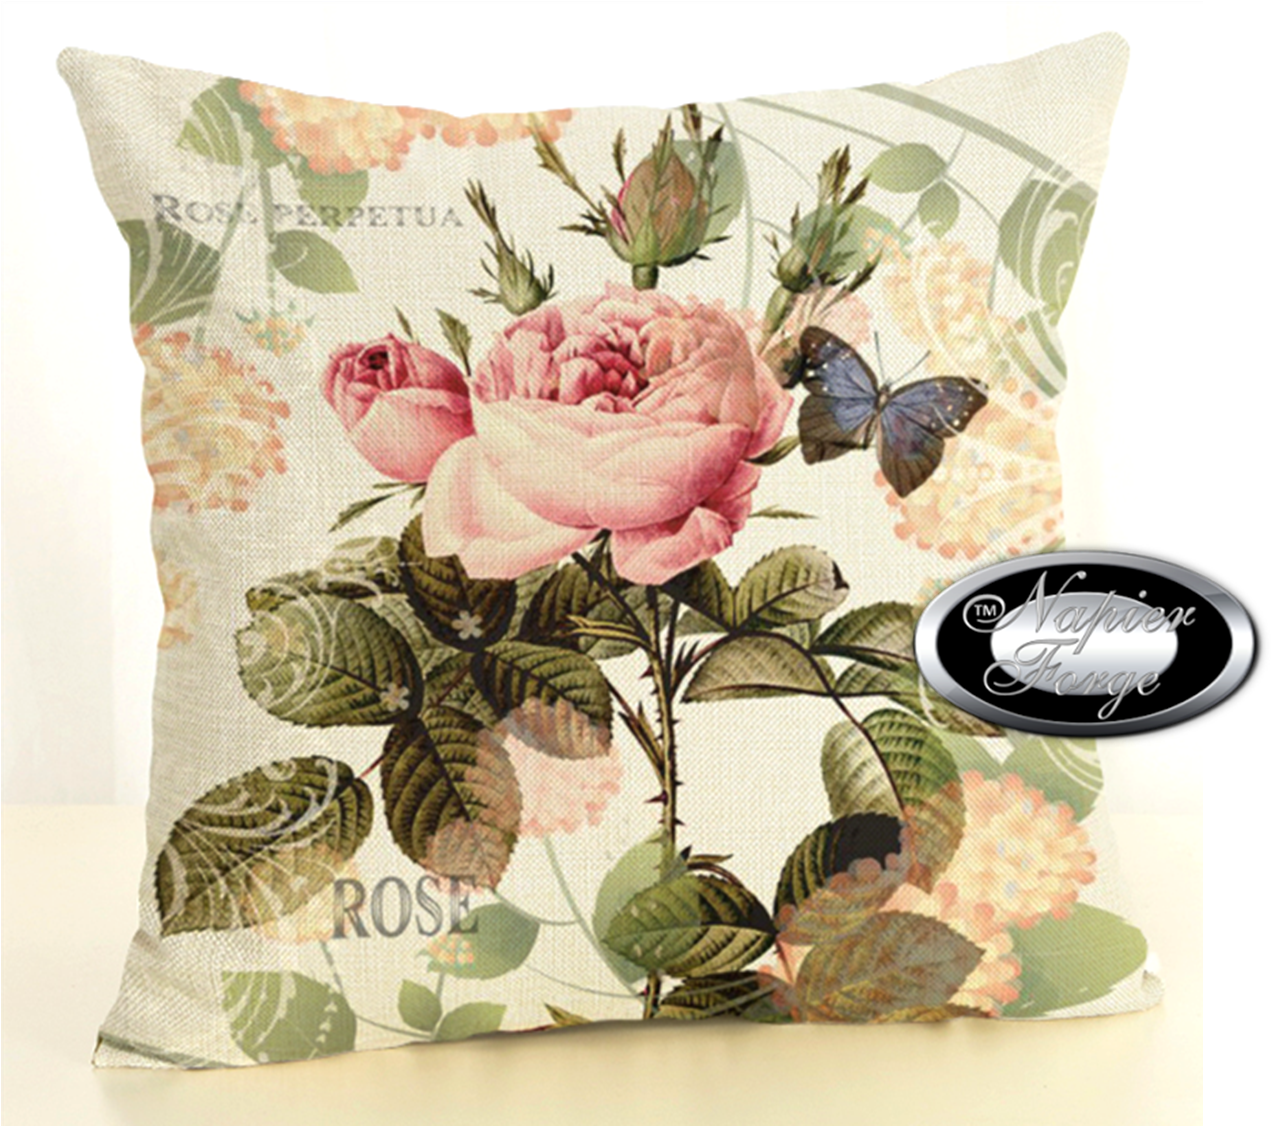 Farmhouse Cotton Linen Blend Cushion Cover 45cm x 45cm - Design Heirloom Rose Perpetua *Free Shipping